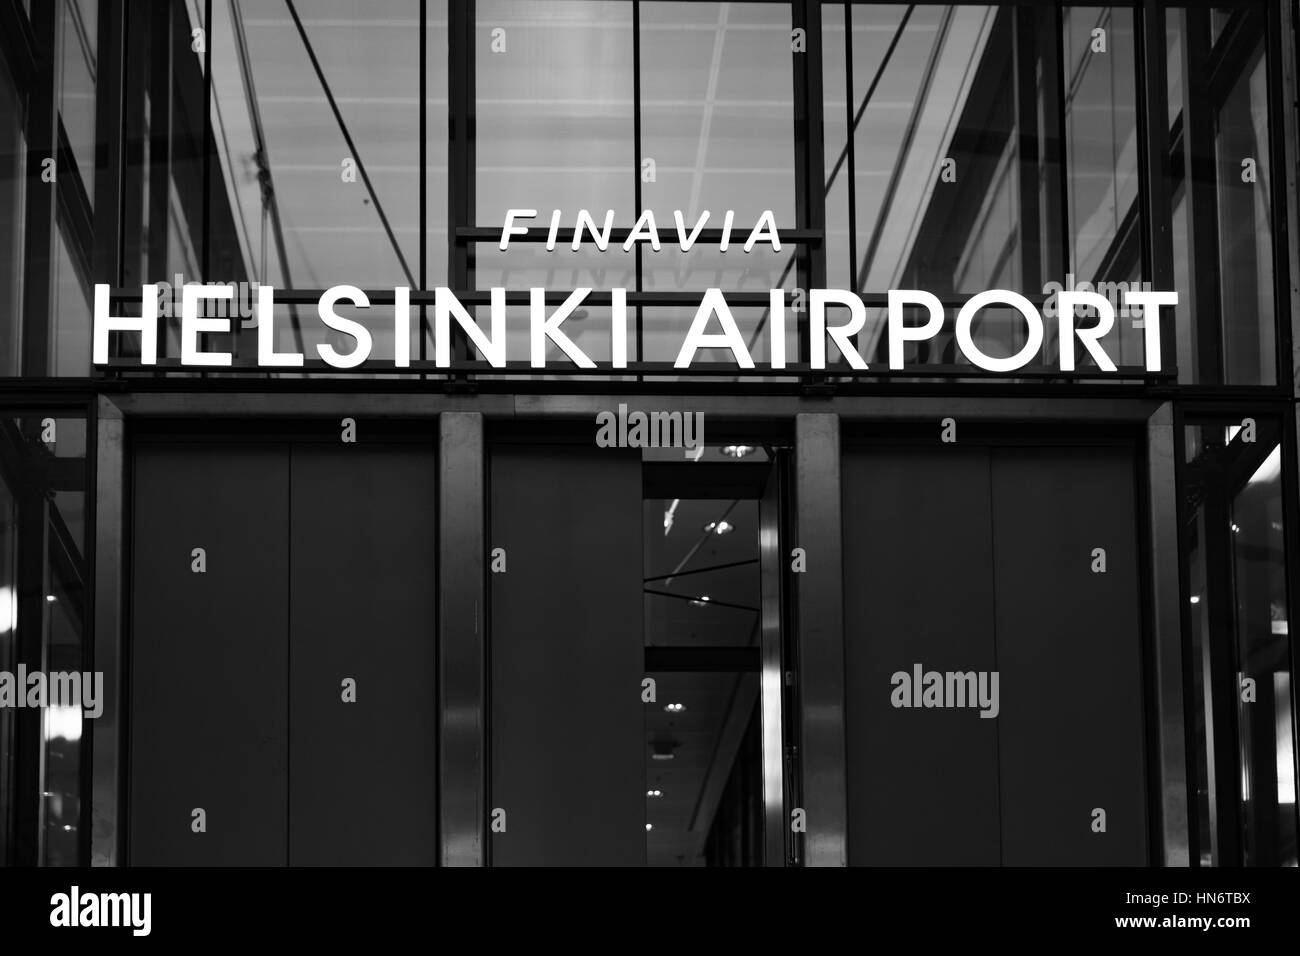 Aeroporto di Helsinki Finavia Foto Stock